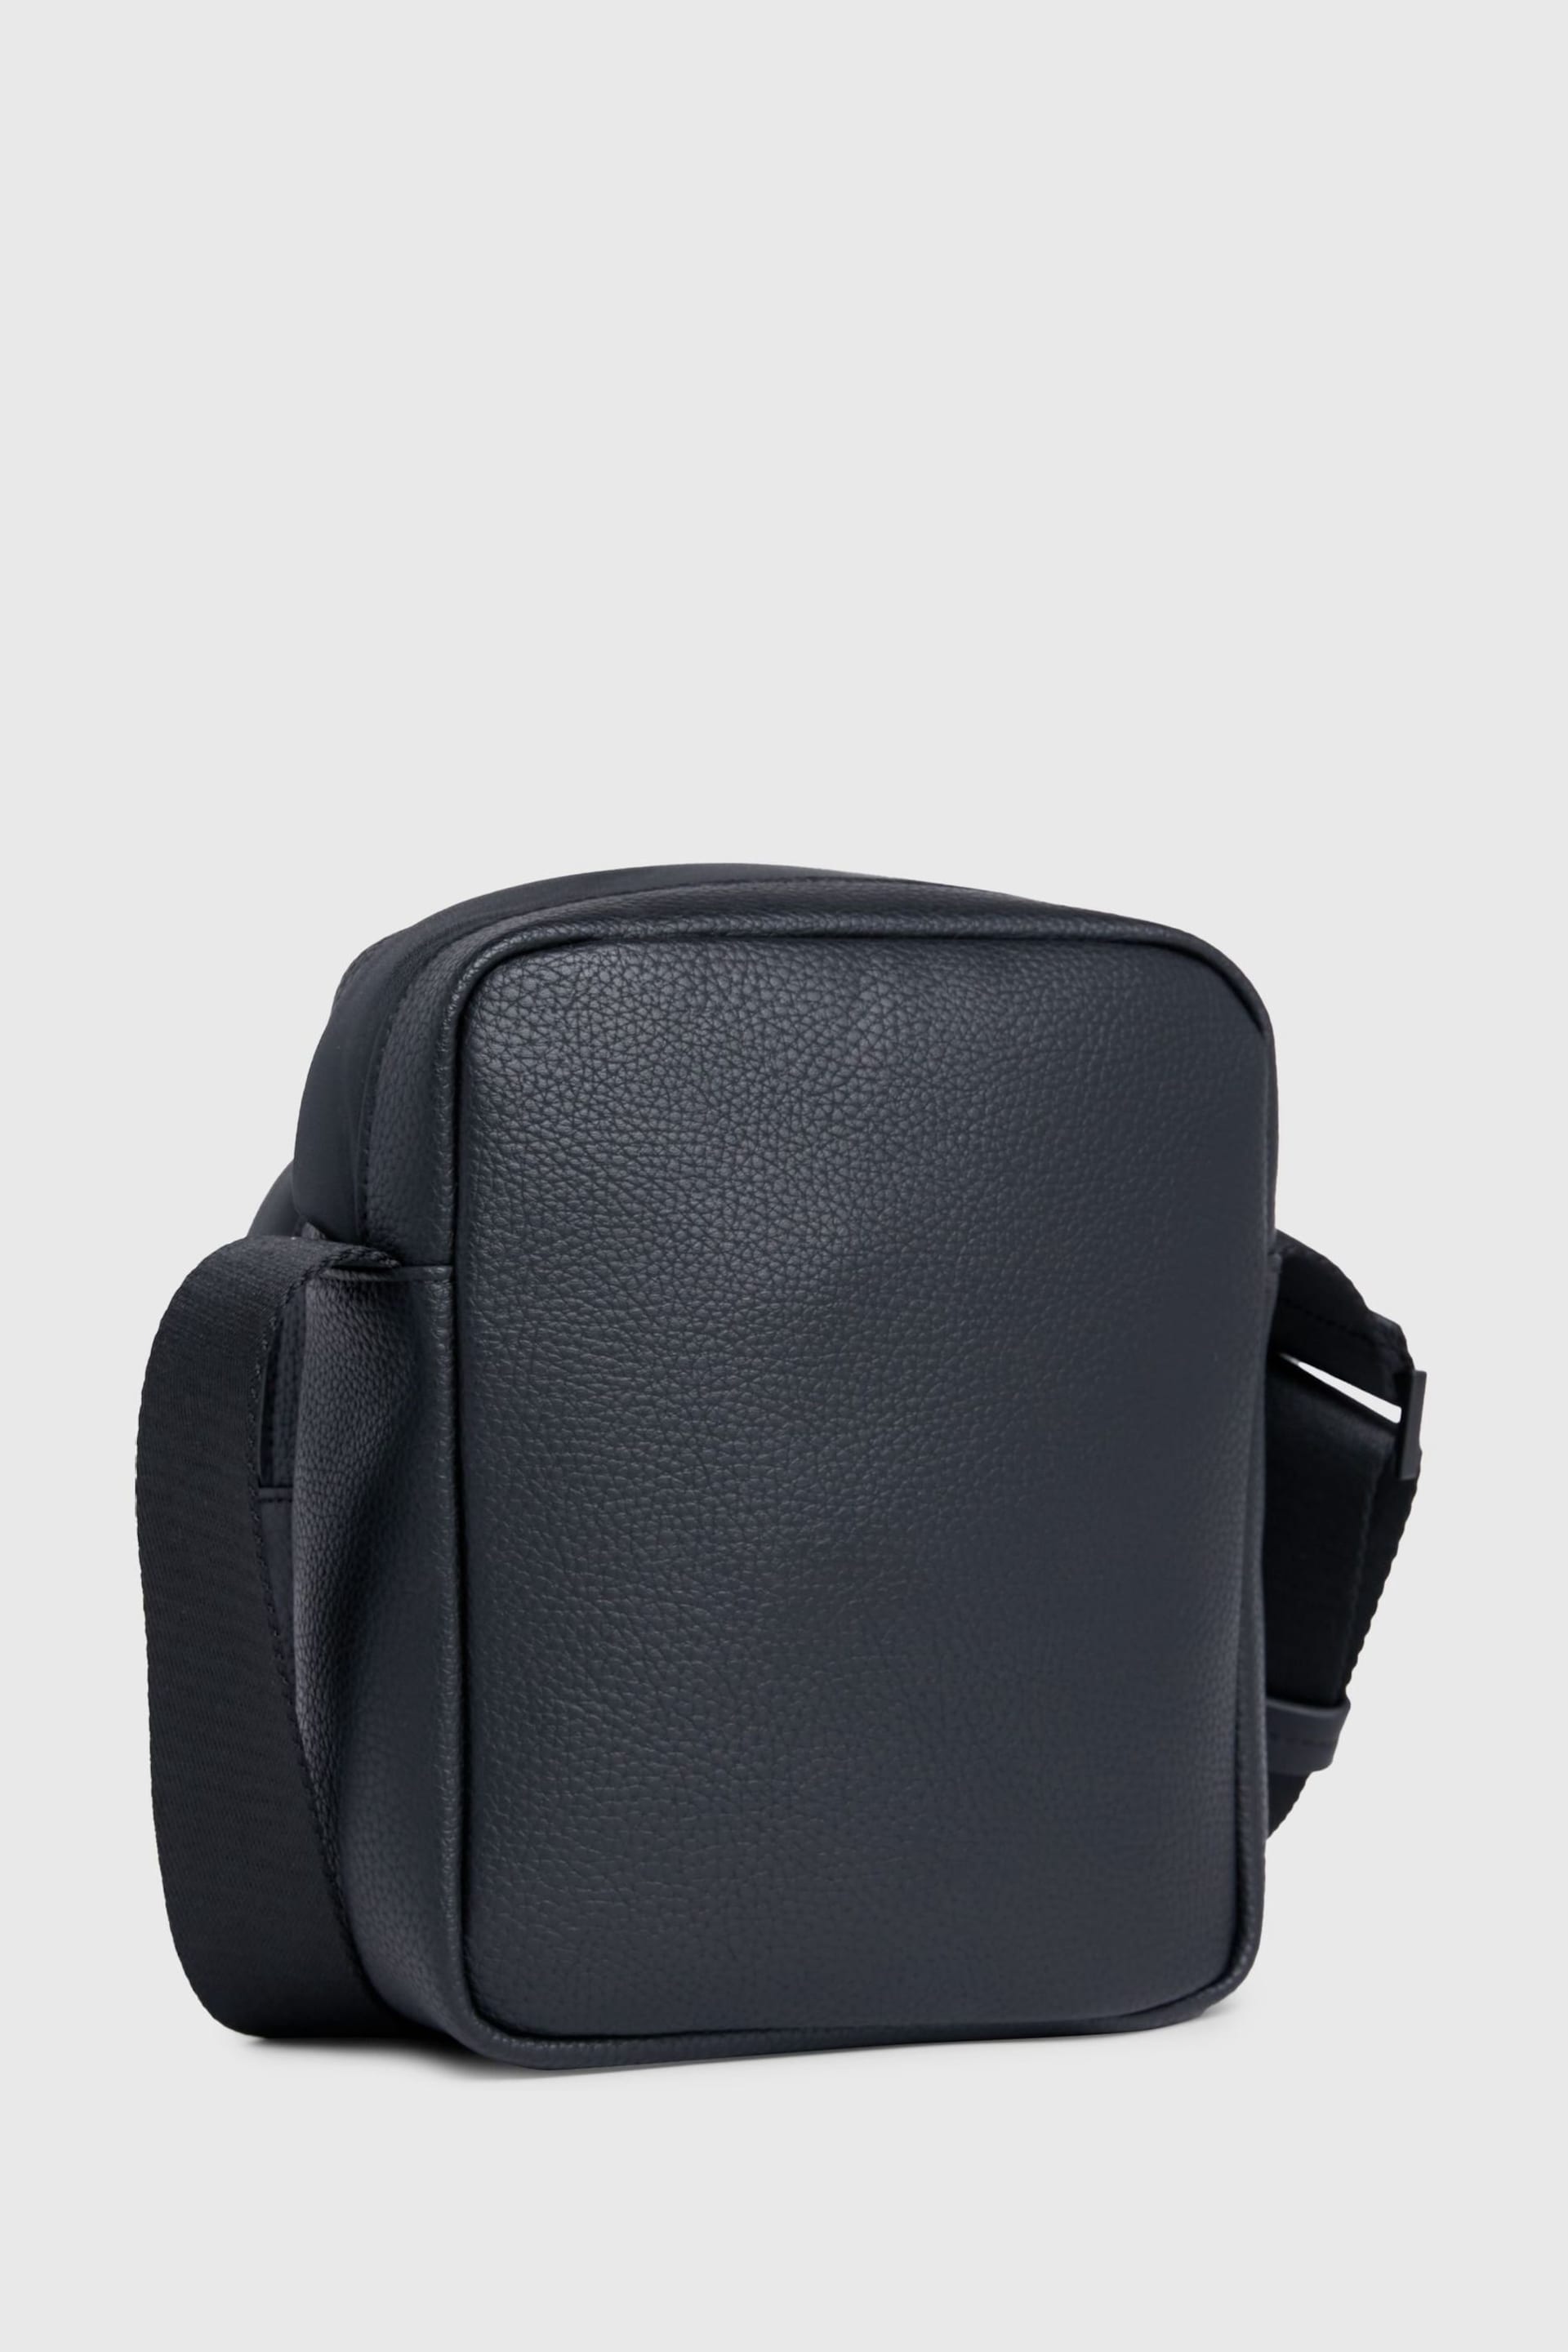 Calvin Klein Black Logo Messenger Bag - Image 4 of 7